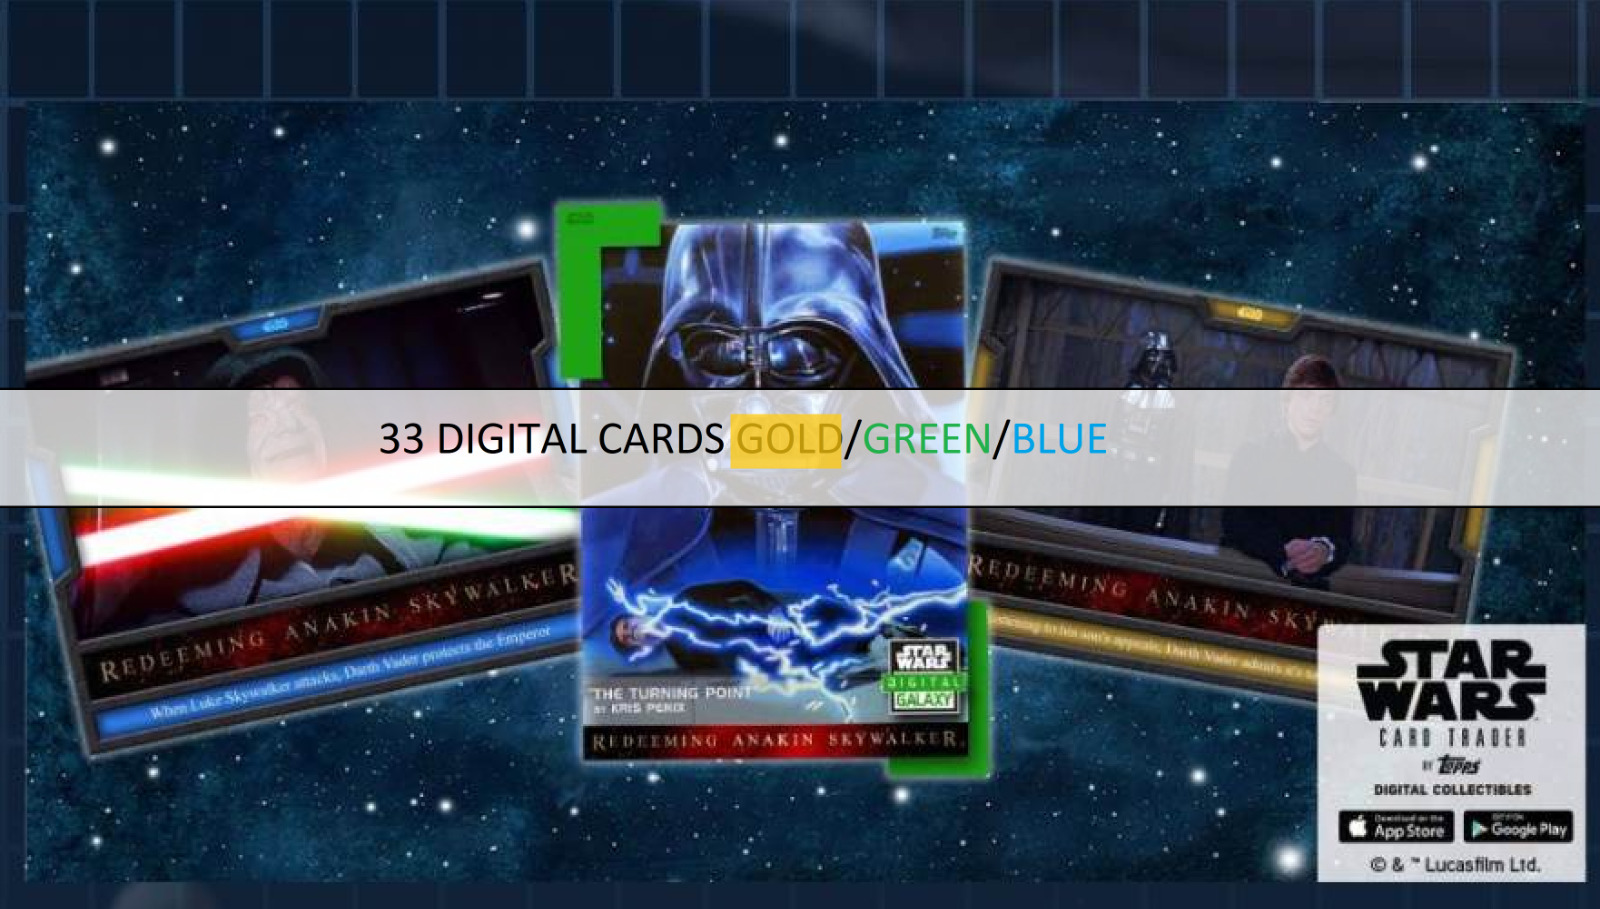 Topps Star Wars Card Trader REDEEMING ANAKIN SKYWALKER NOVEMBER GOLD GREEN BLUE